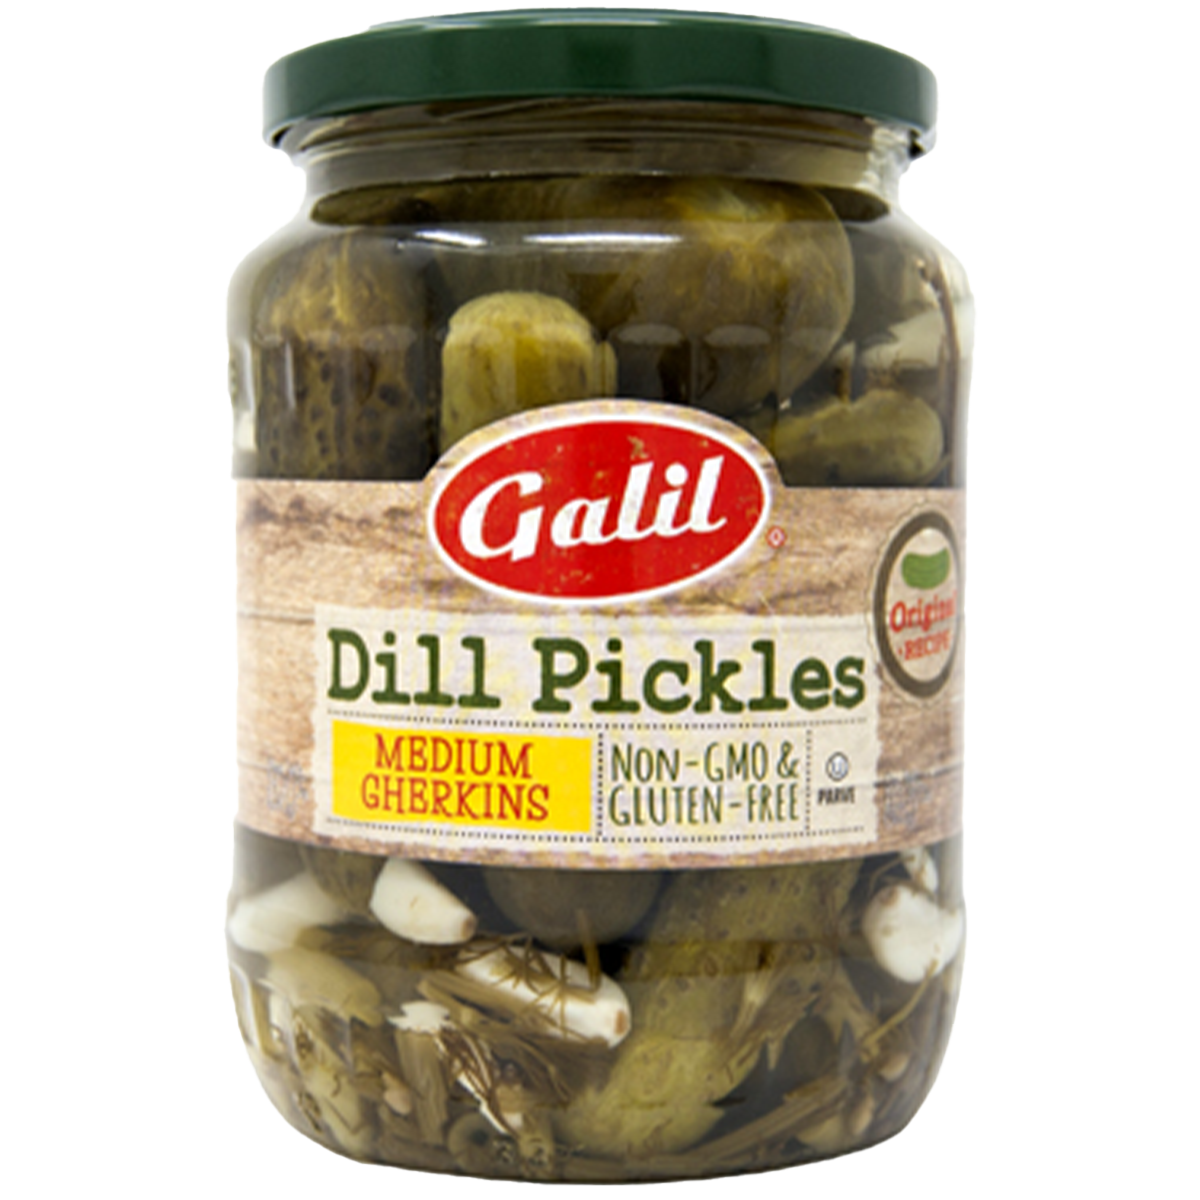 Dill Pickles | Medium Gherkins | 24 oz | Galil